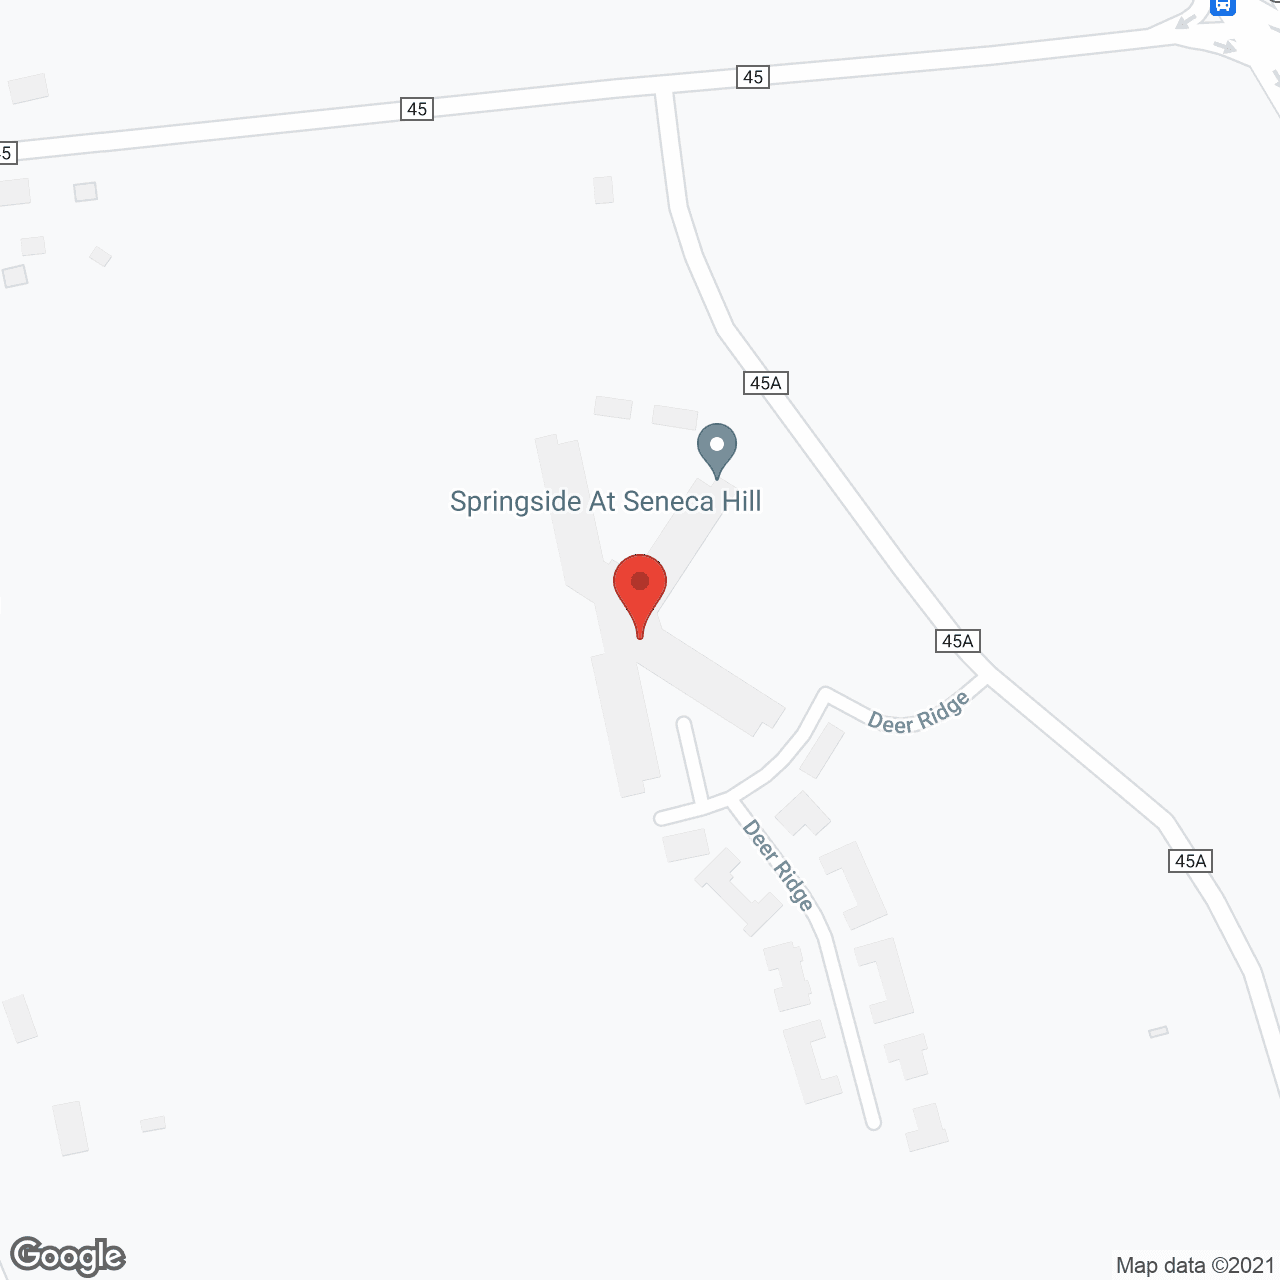 Springside At Seneca Hill in google map